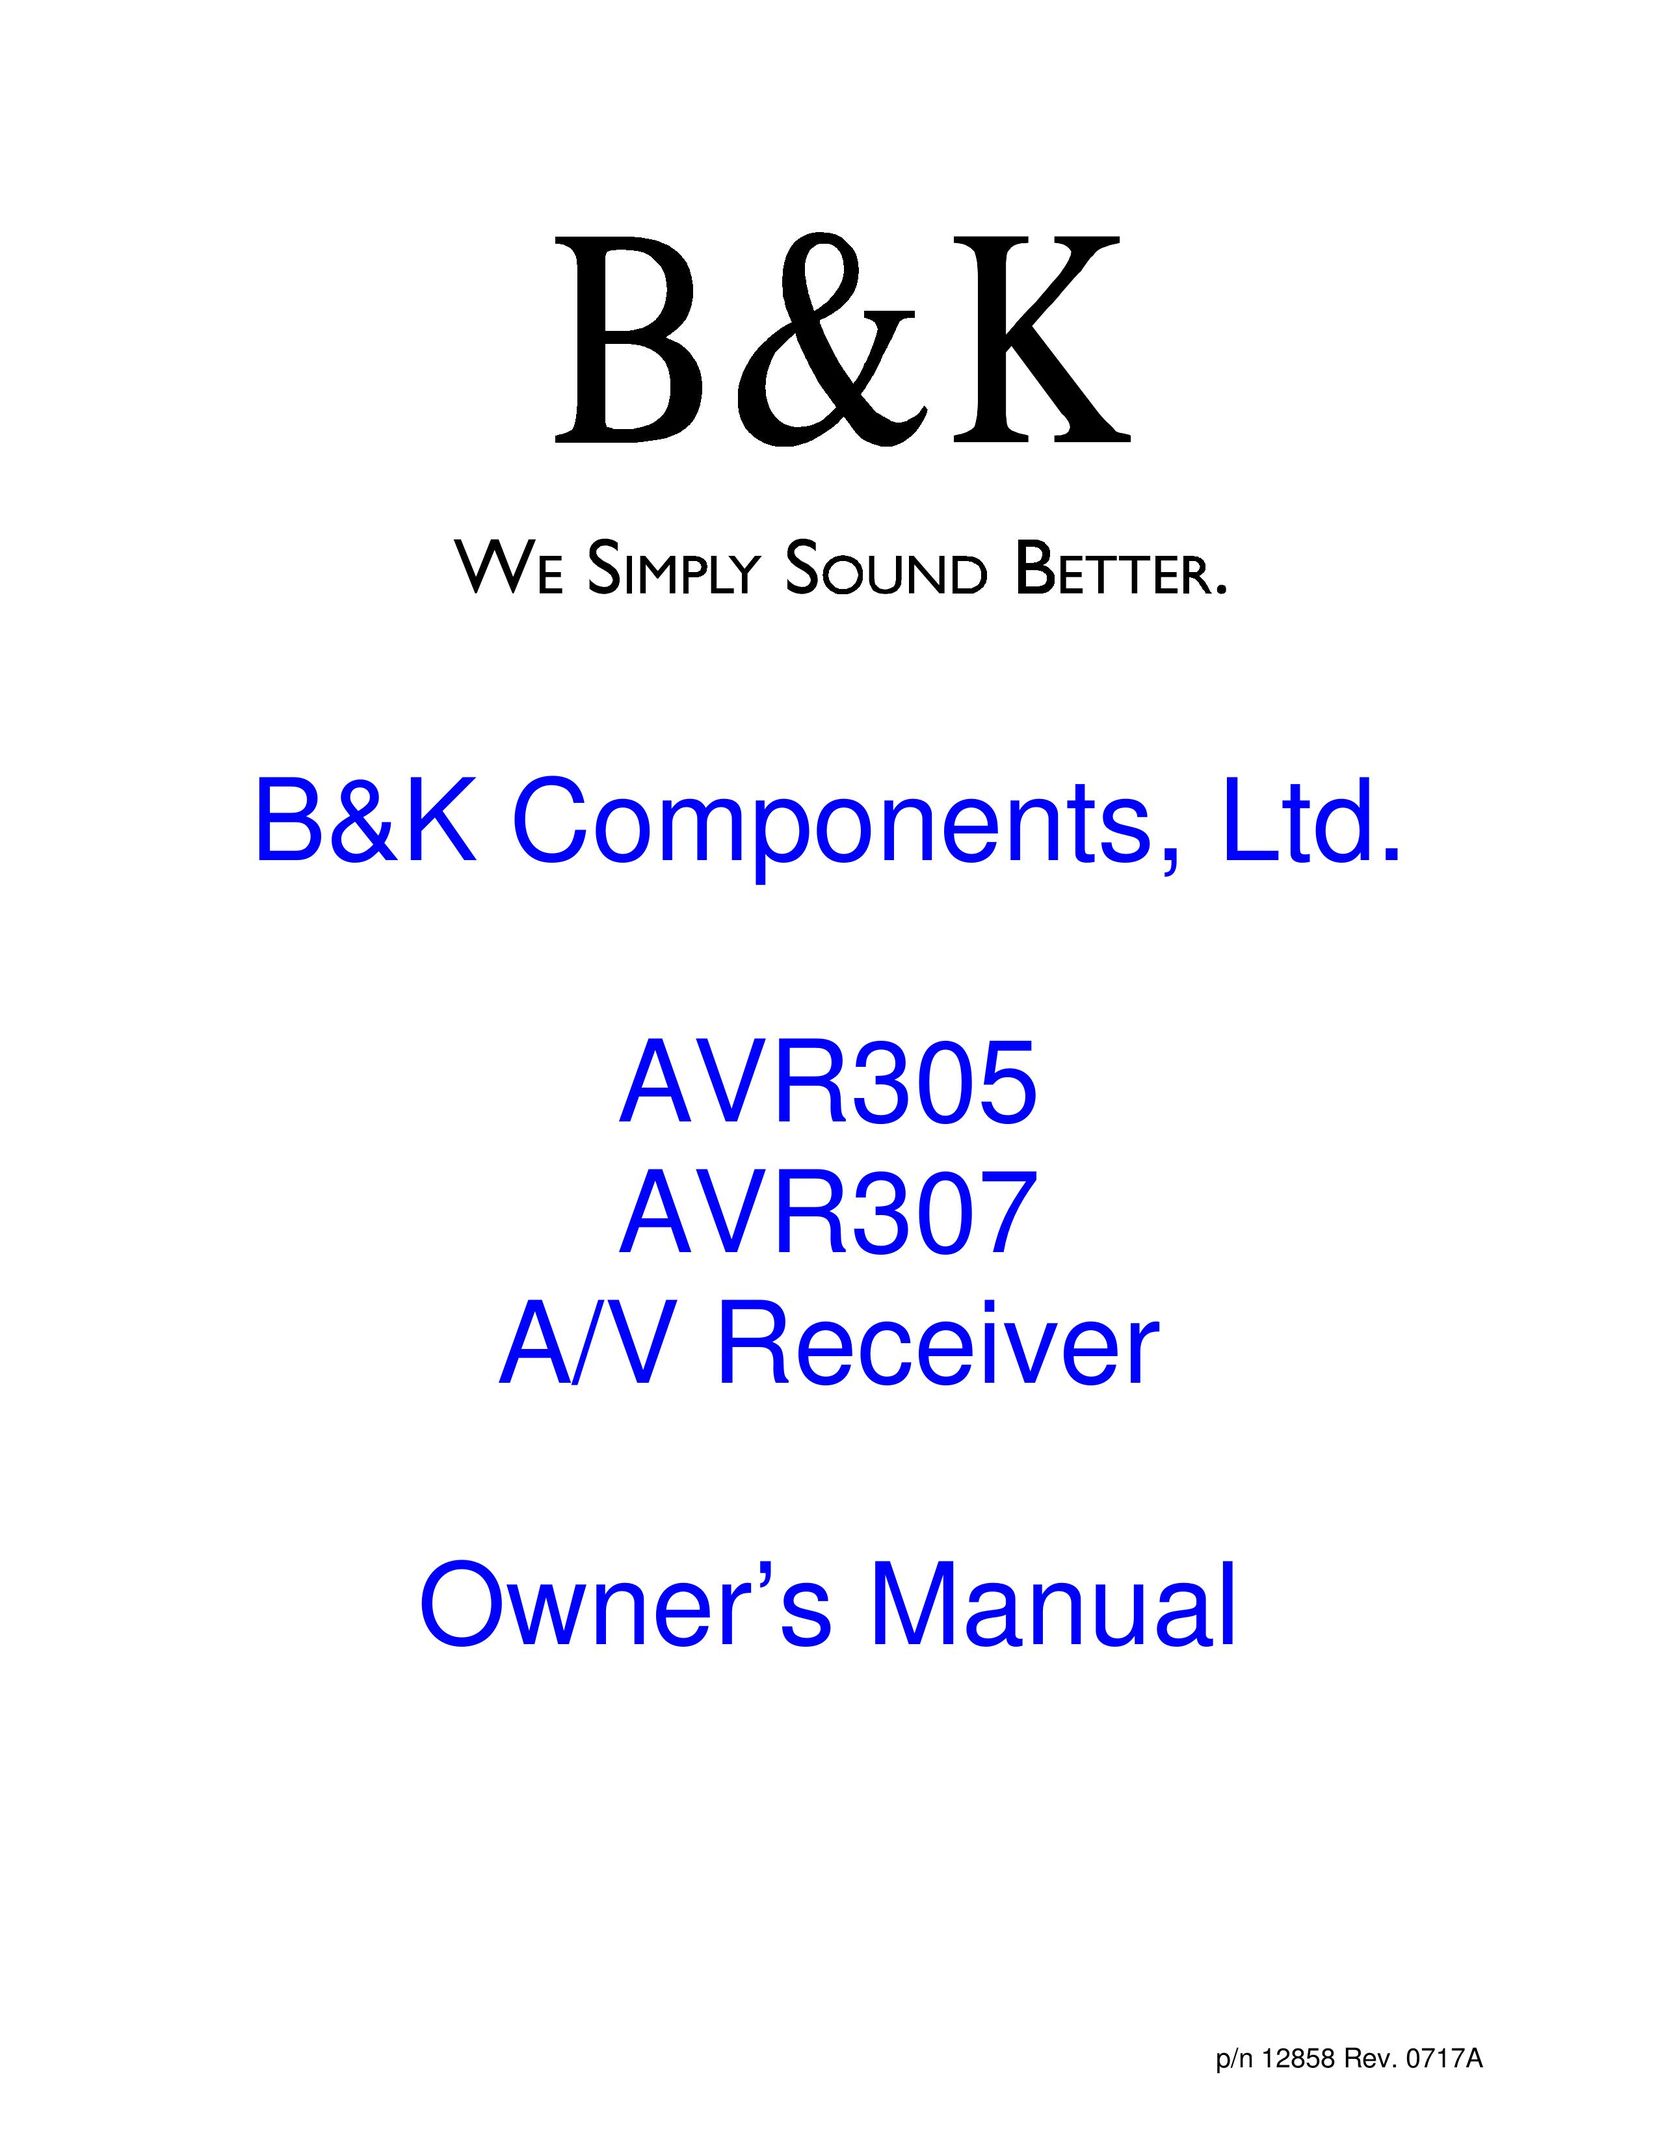 B&K AVR307 Stereo Receiver User Manual